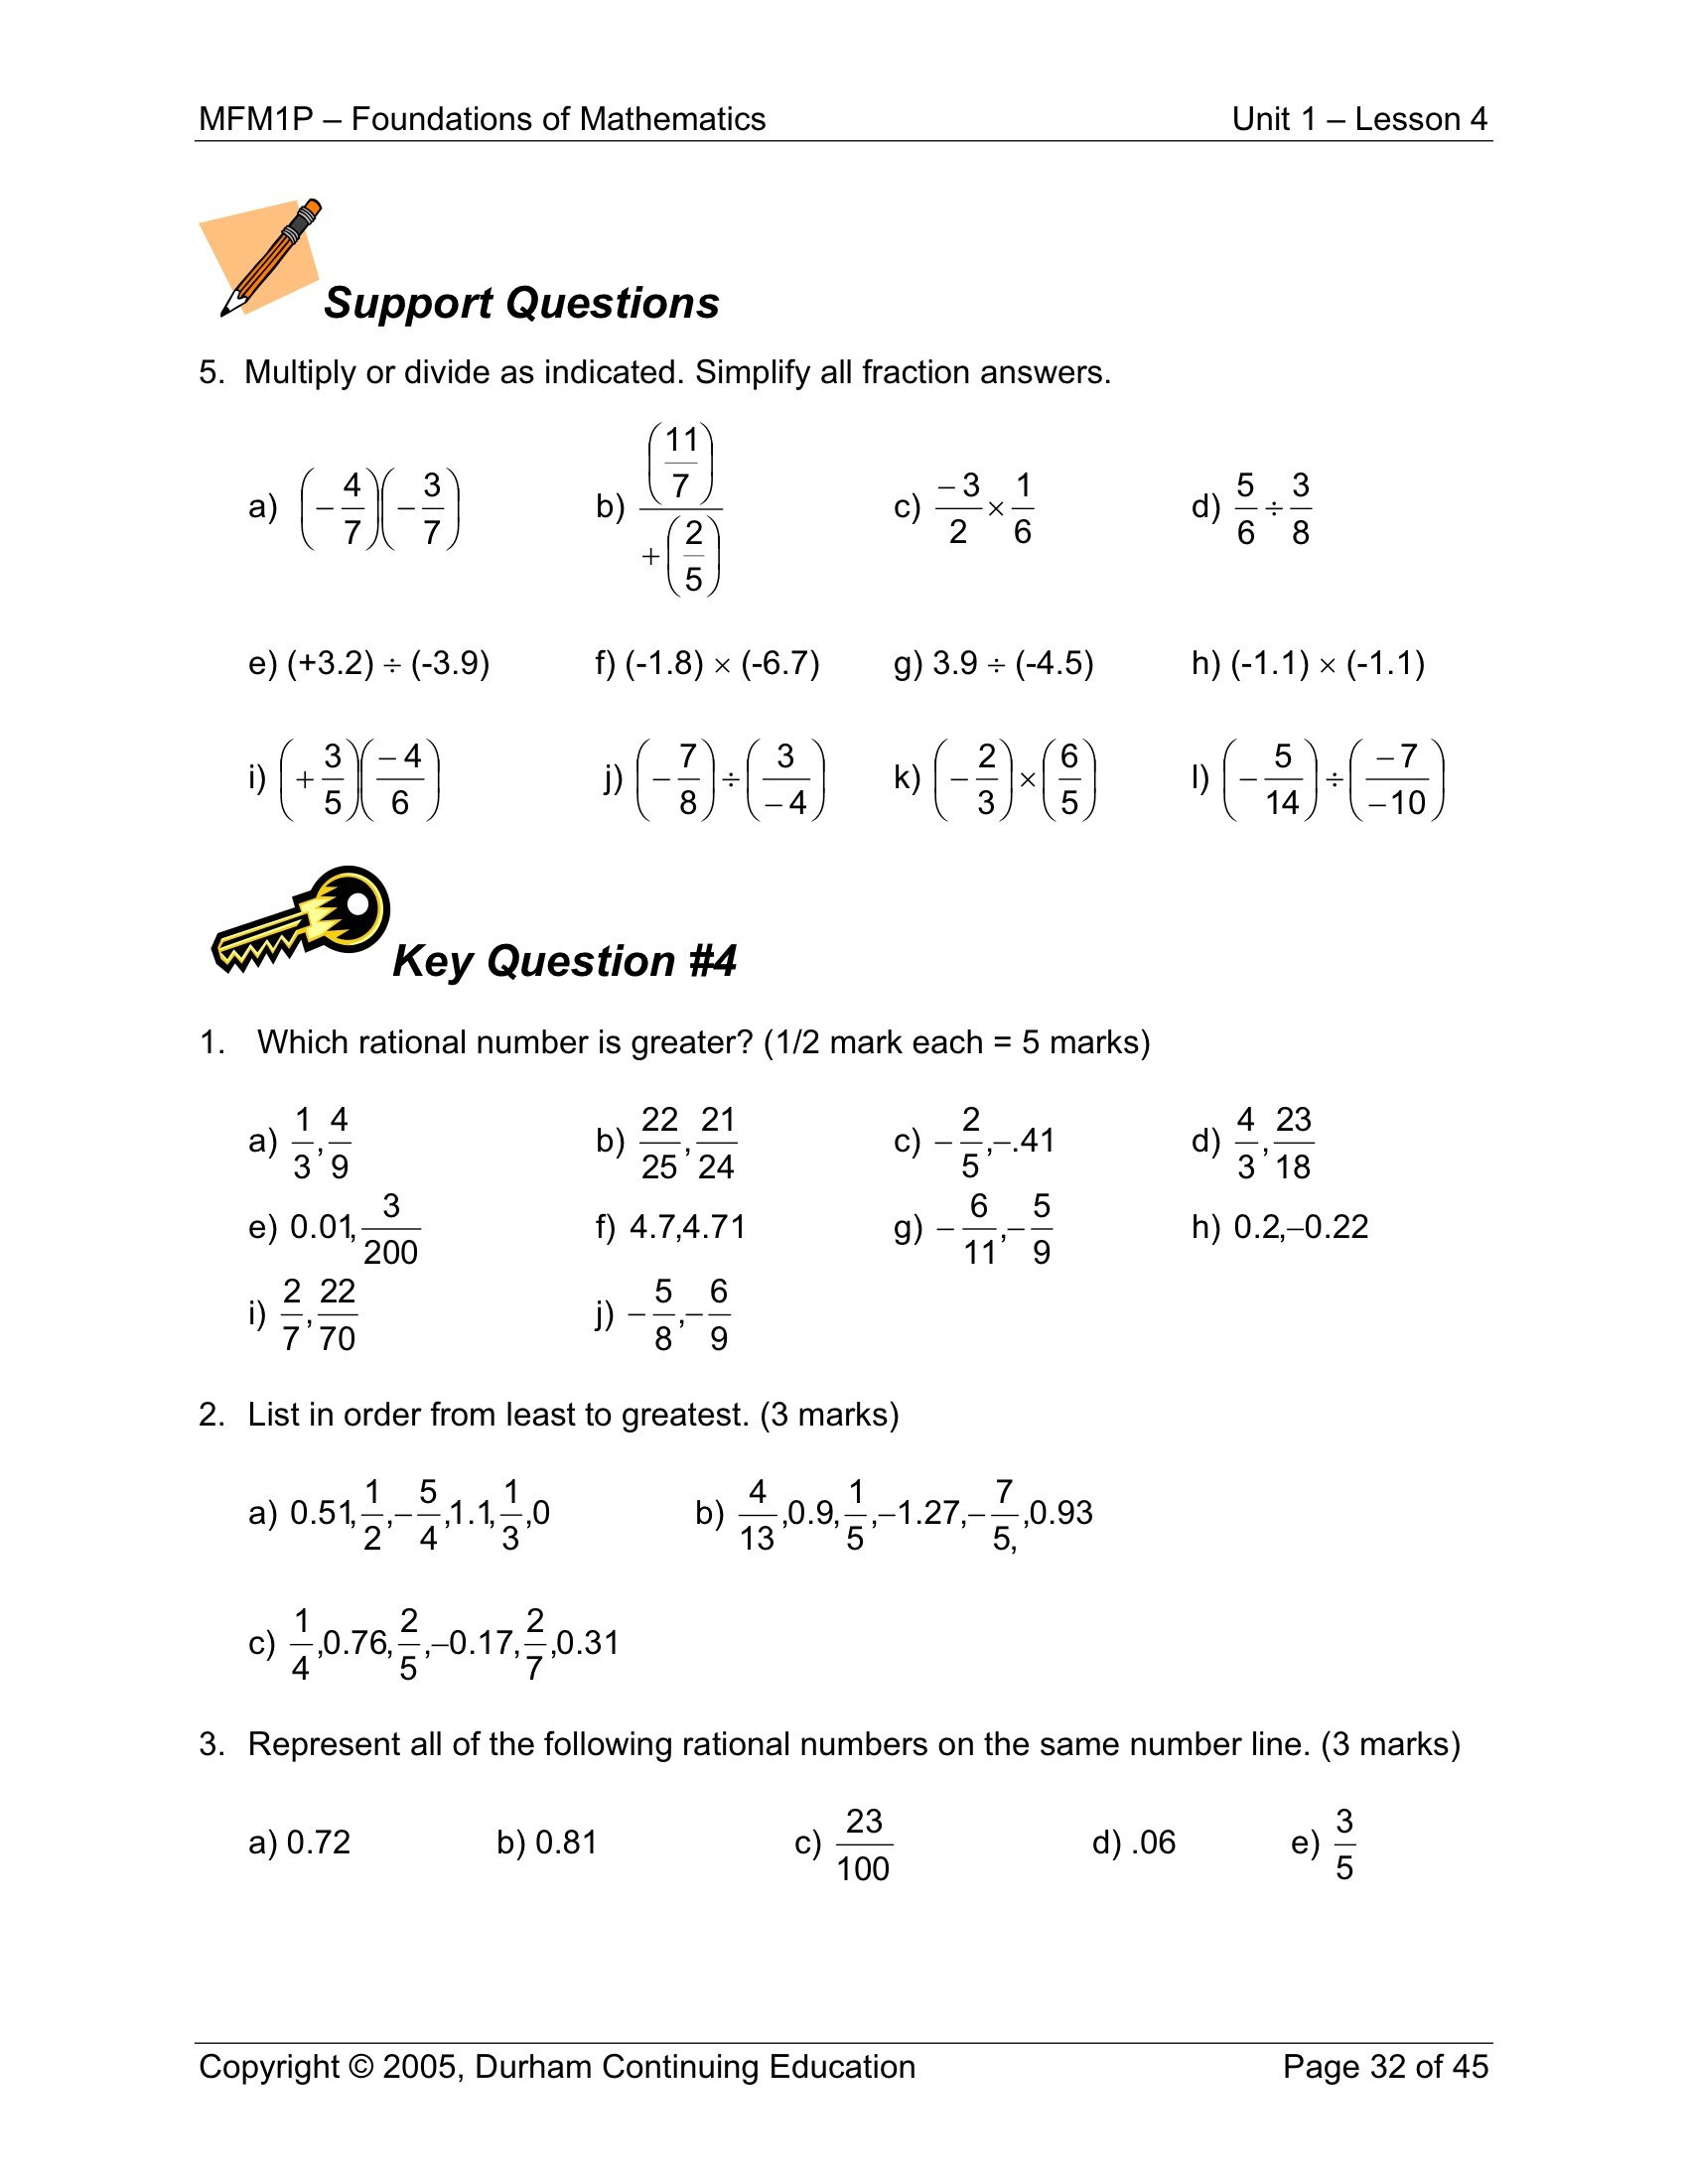 Free Math Worksheets Third Grade 3 Division Division Facts 8 or 9